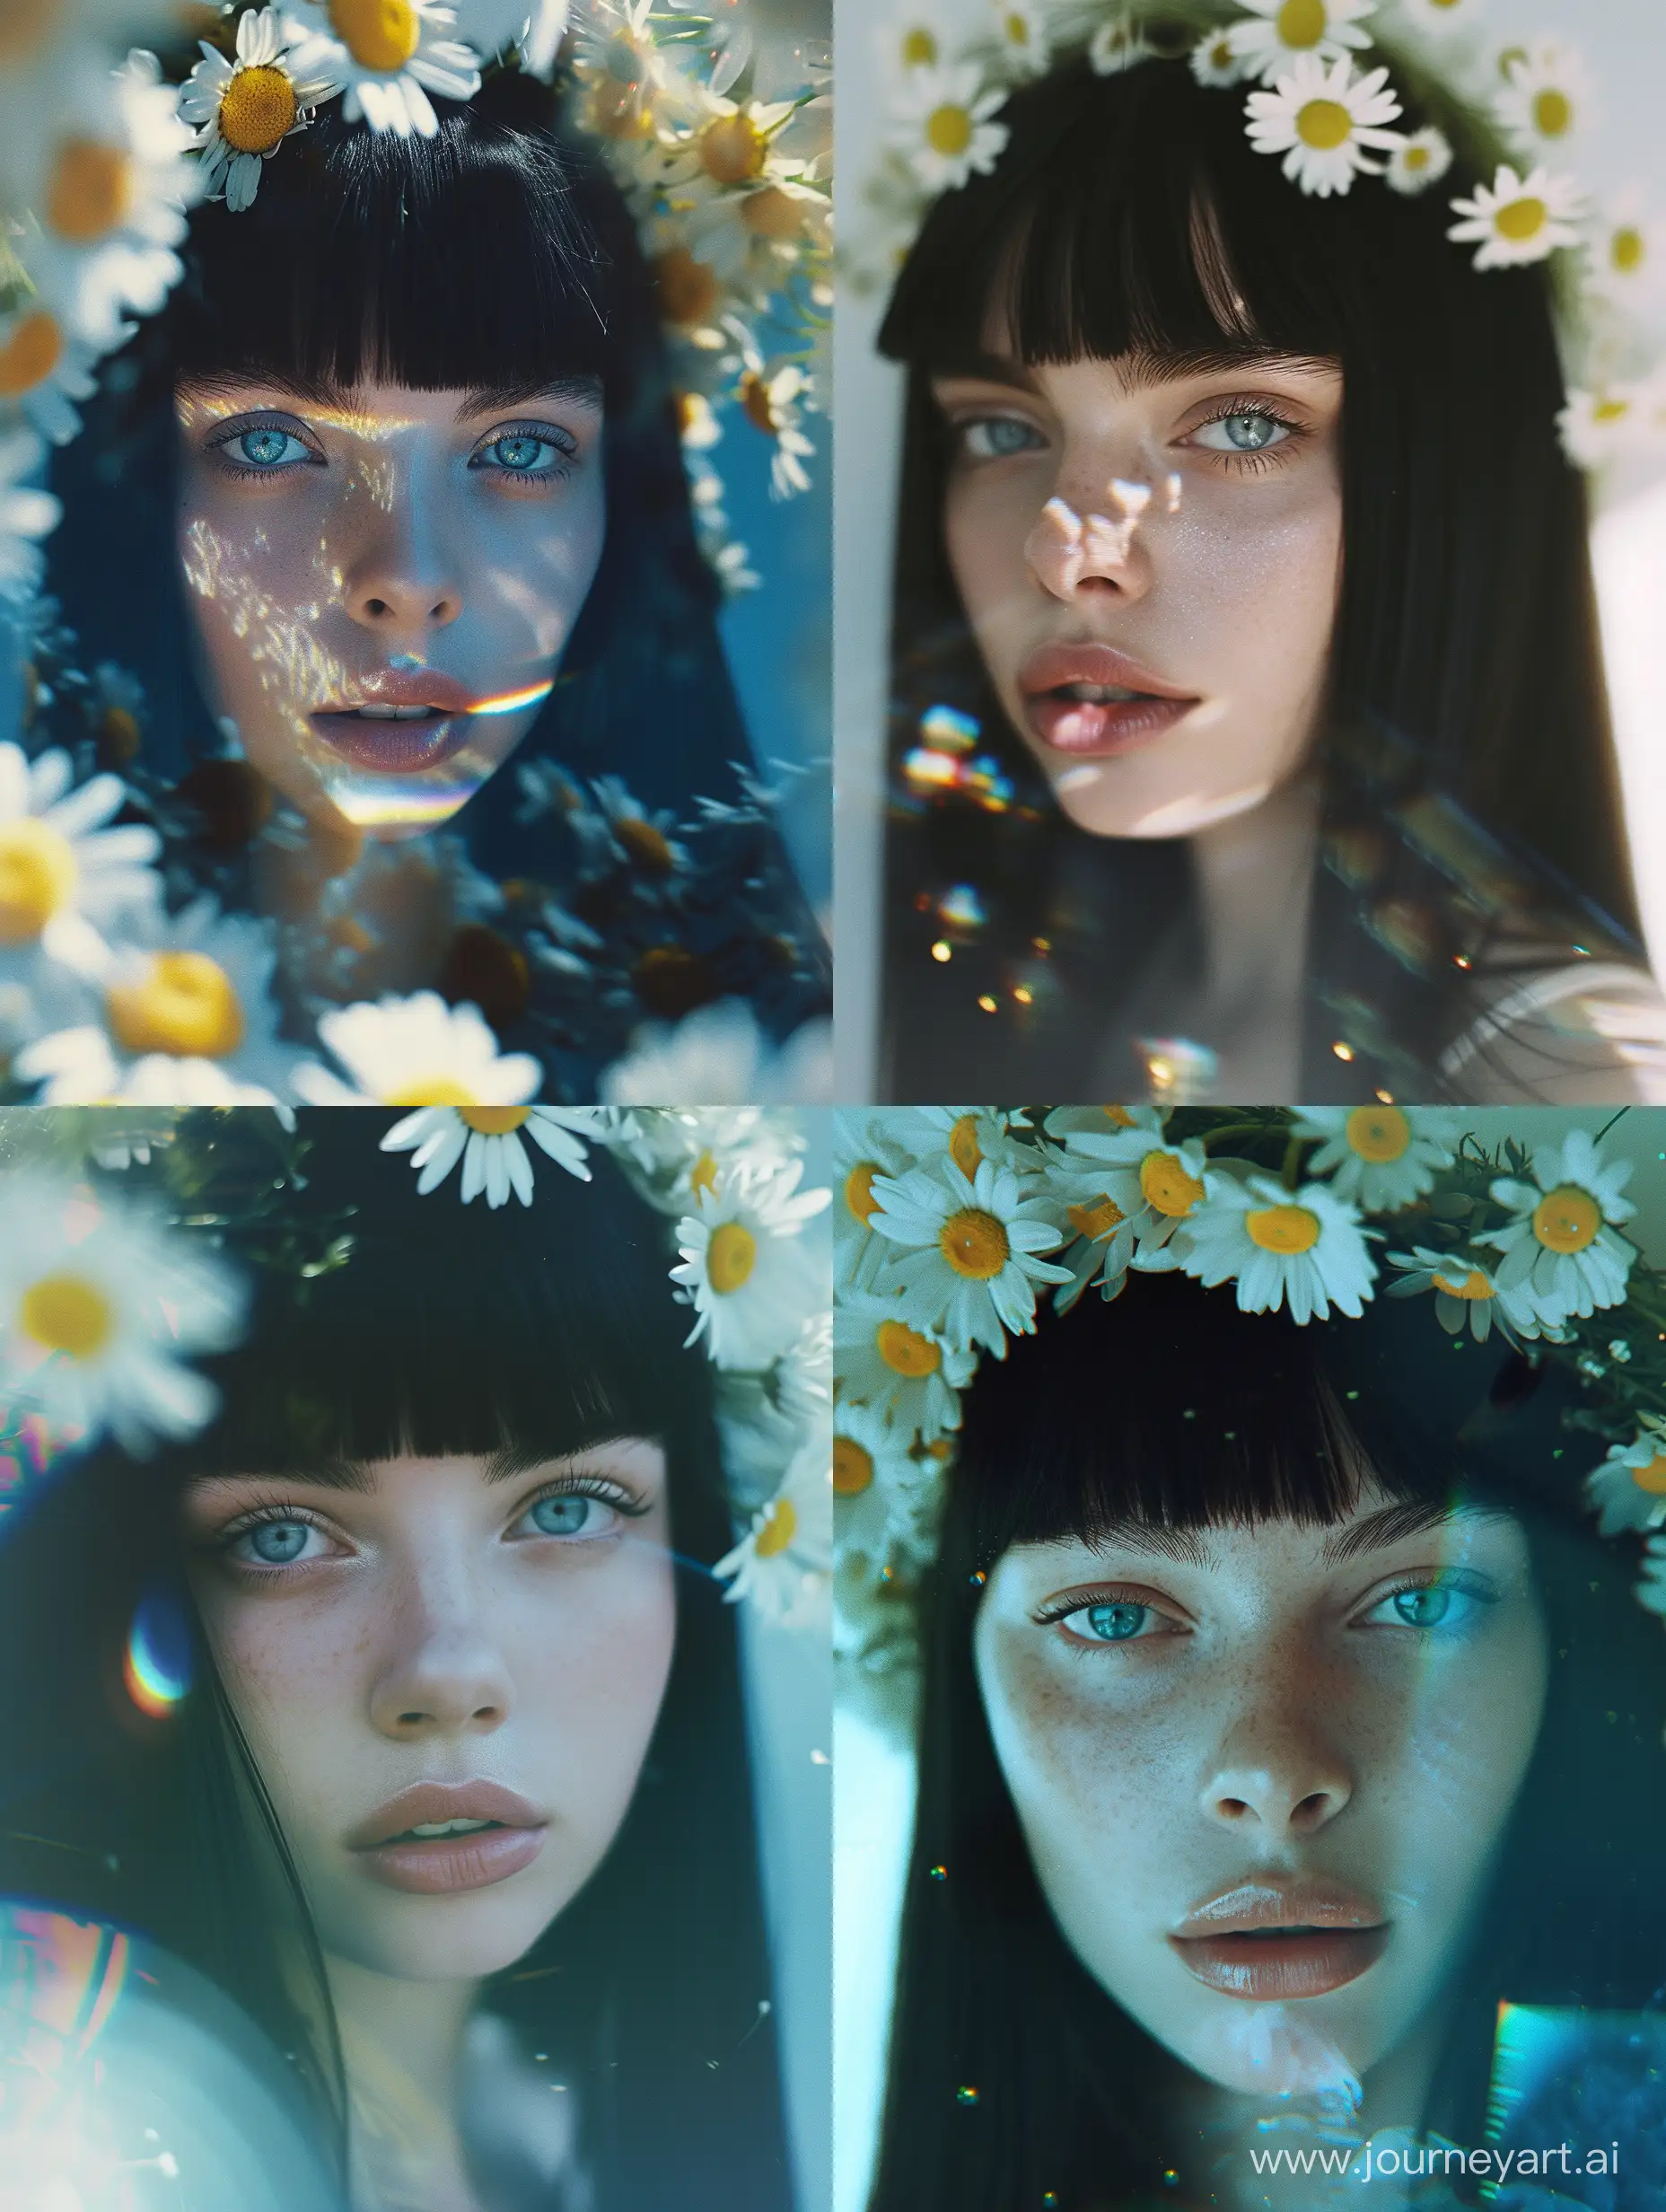 A woman with straight black hair, bangs, dark blue eyes, a wreath of daisies, photo through a prism, business 400 film